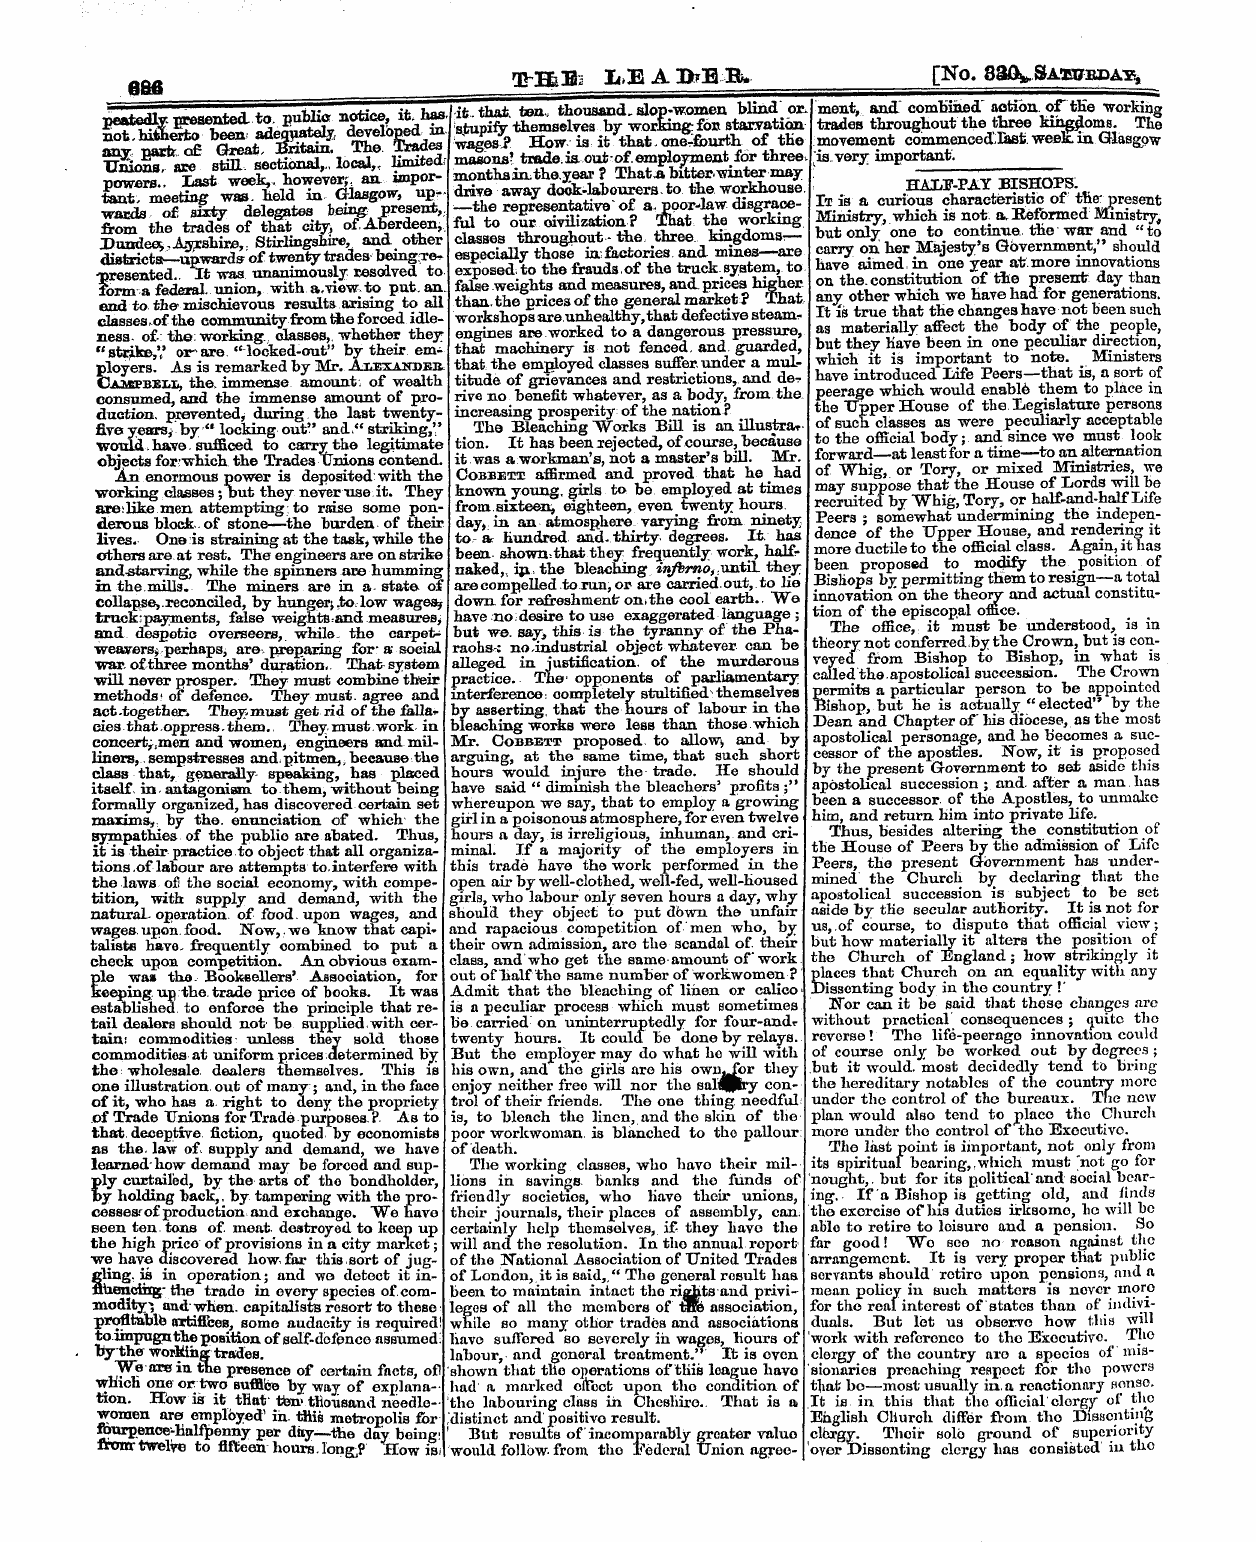 Leader (1850-1860): jS F Y, 2nd edition - Tkeqii Leabrbil [No. Saq^Saotbpay,